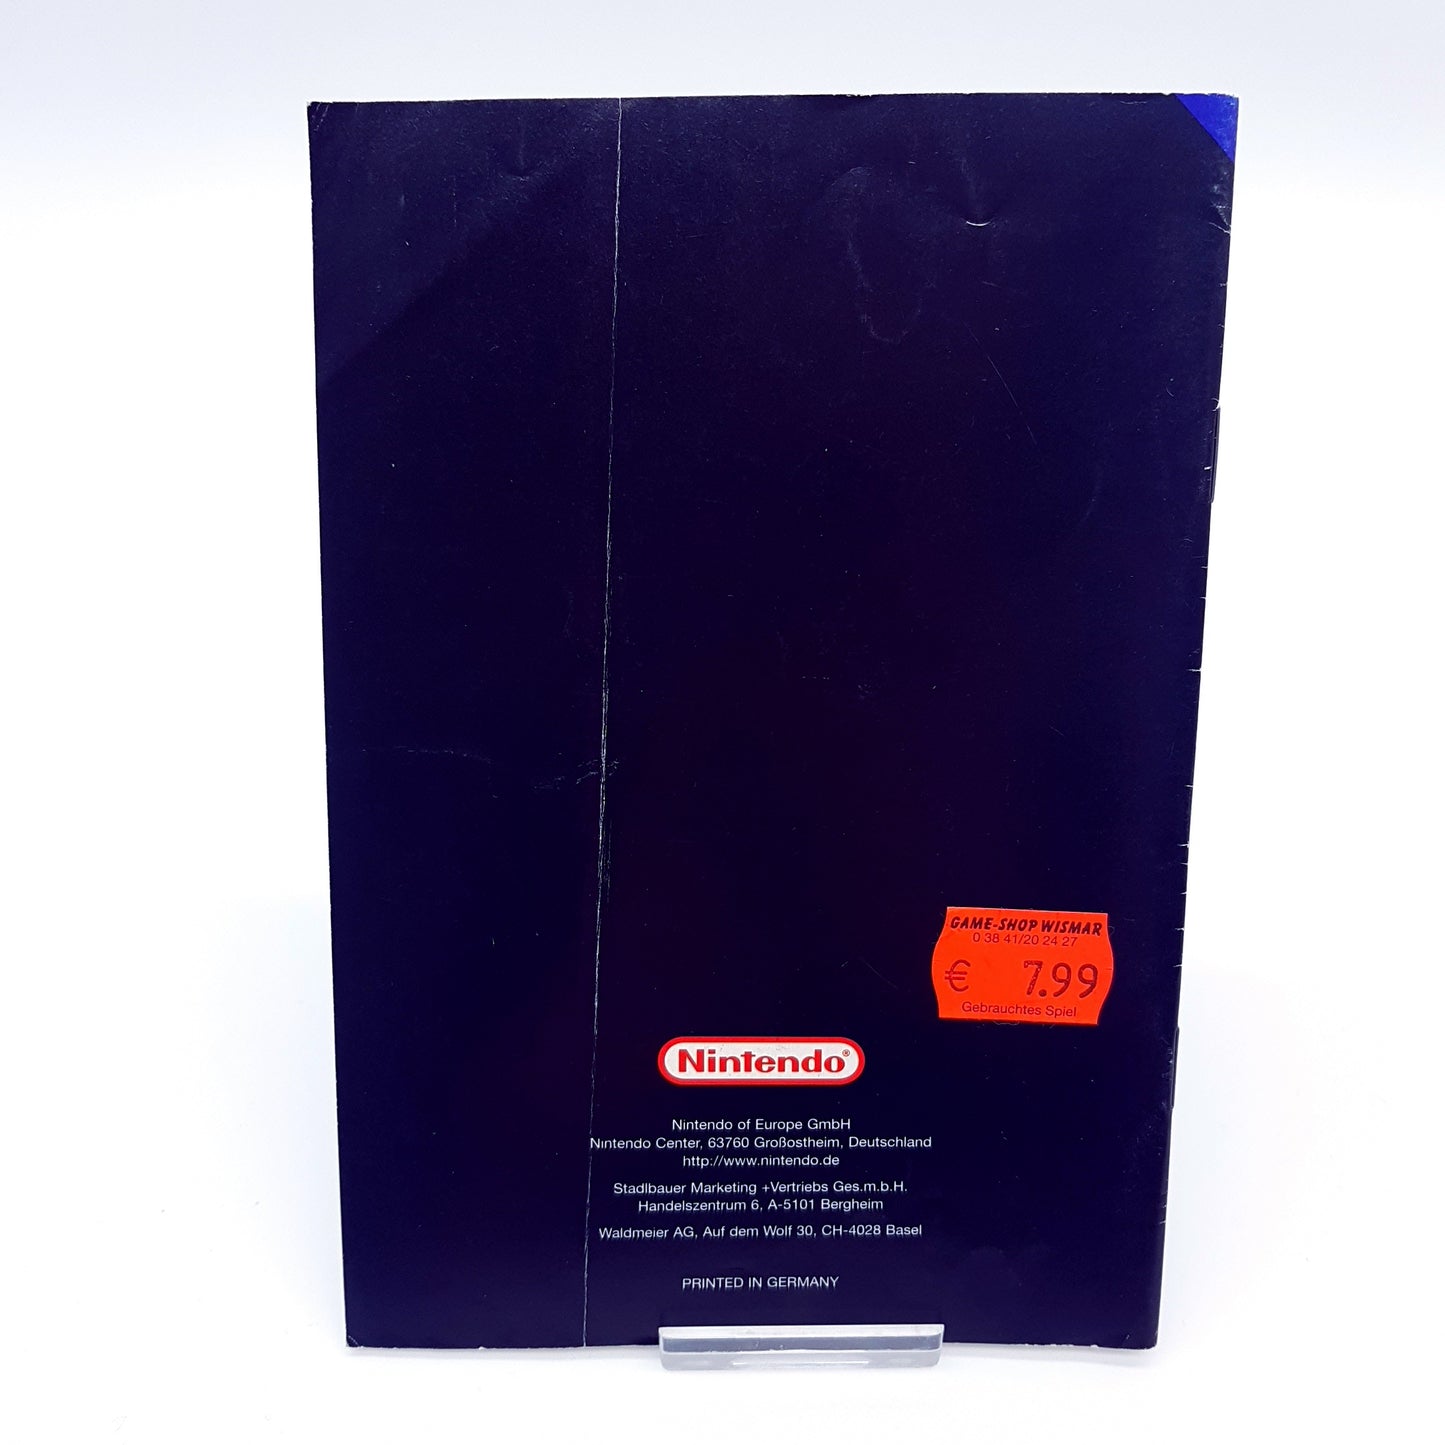 Nintendo 64 - N64 - Anleitung - Mariokart Mario Kart 64